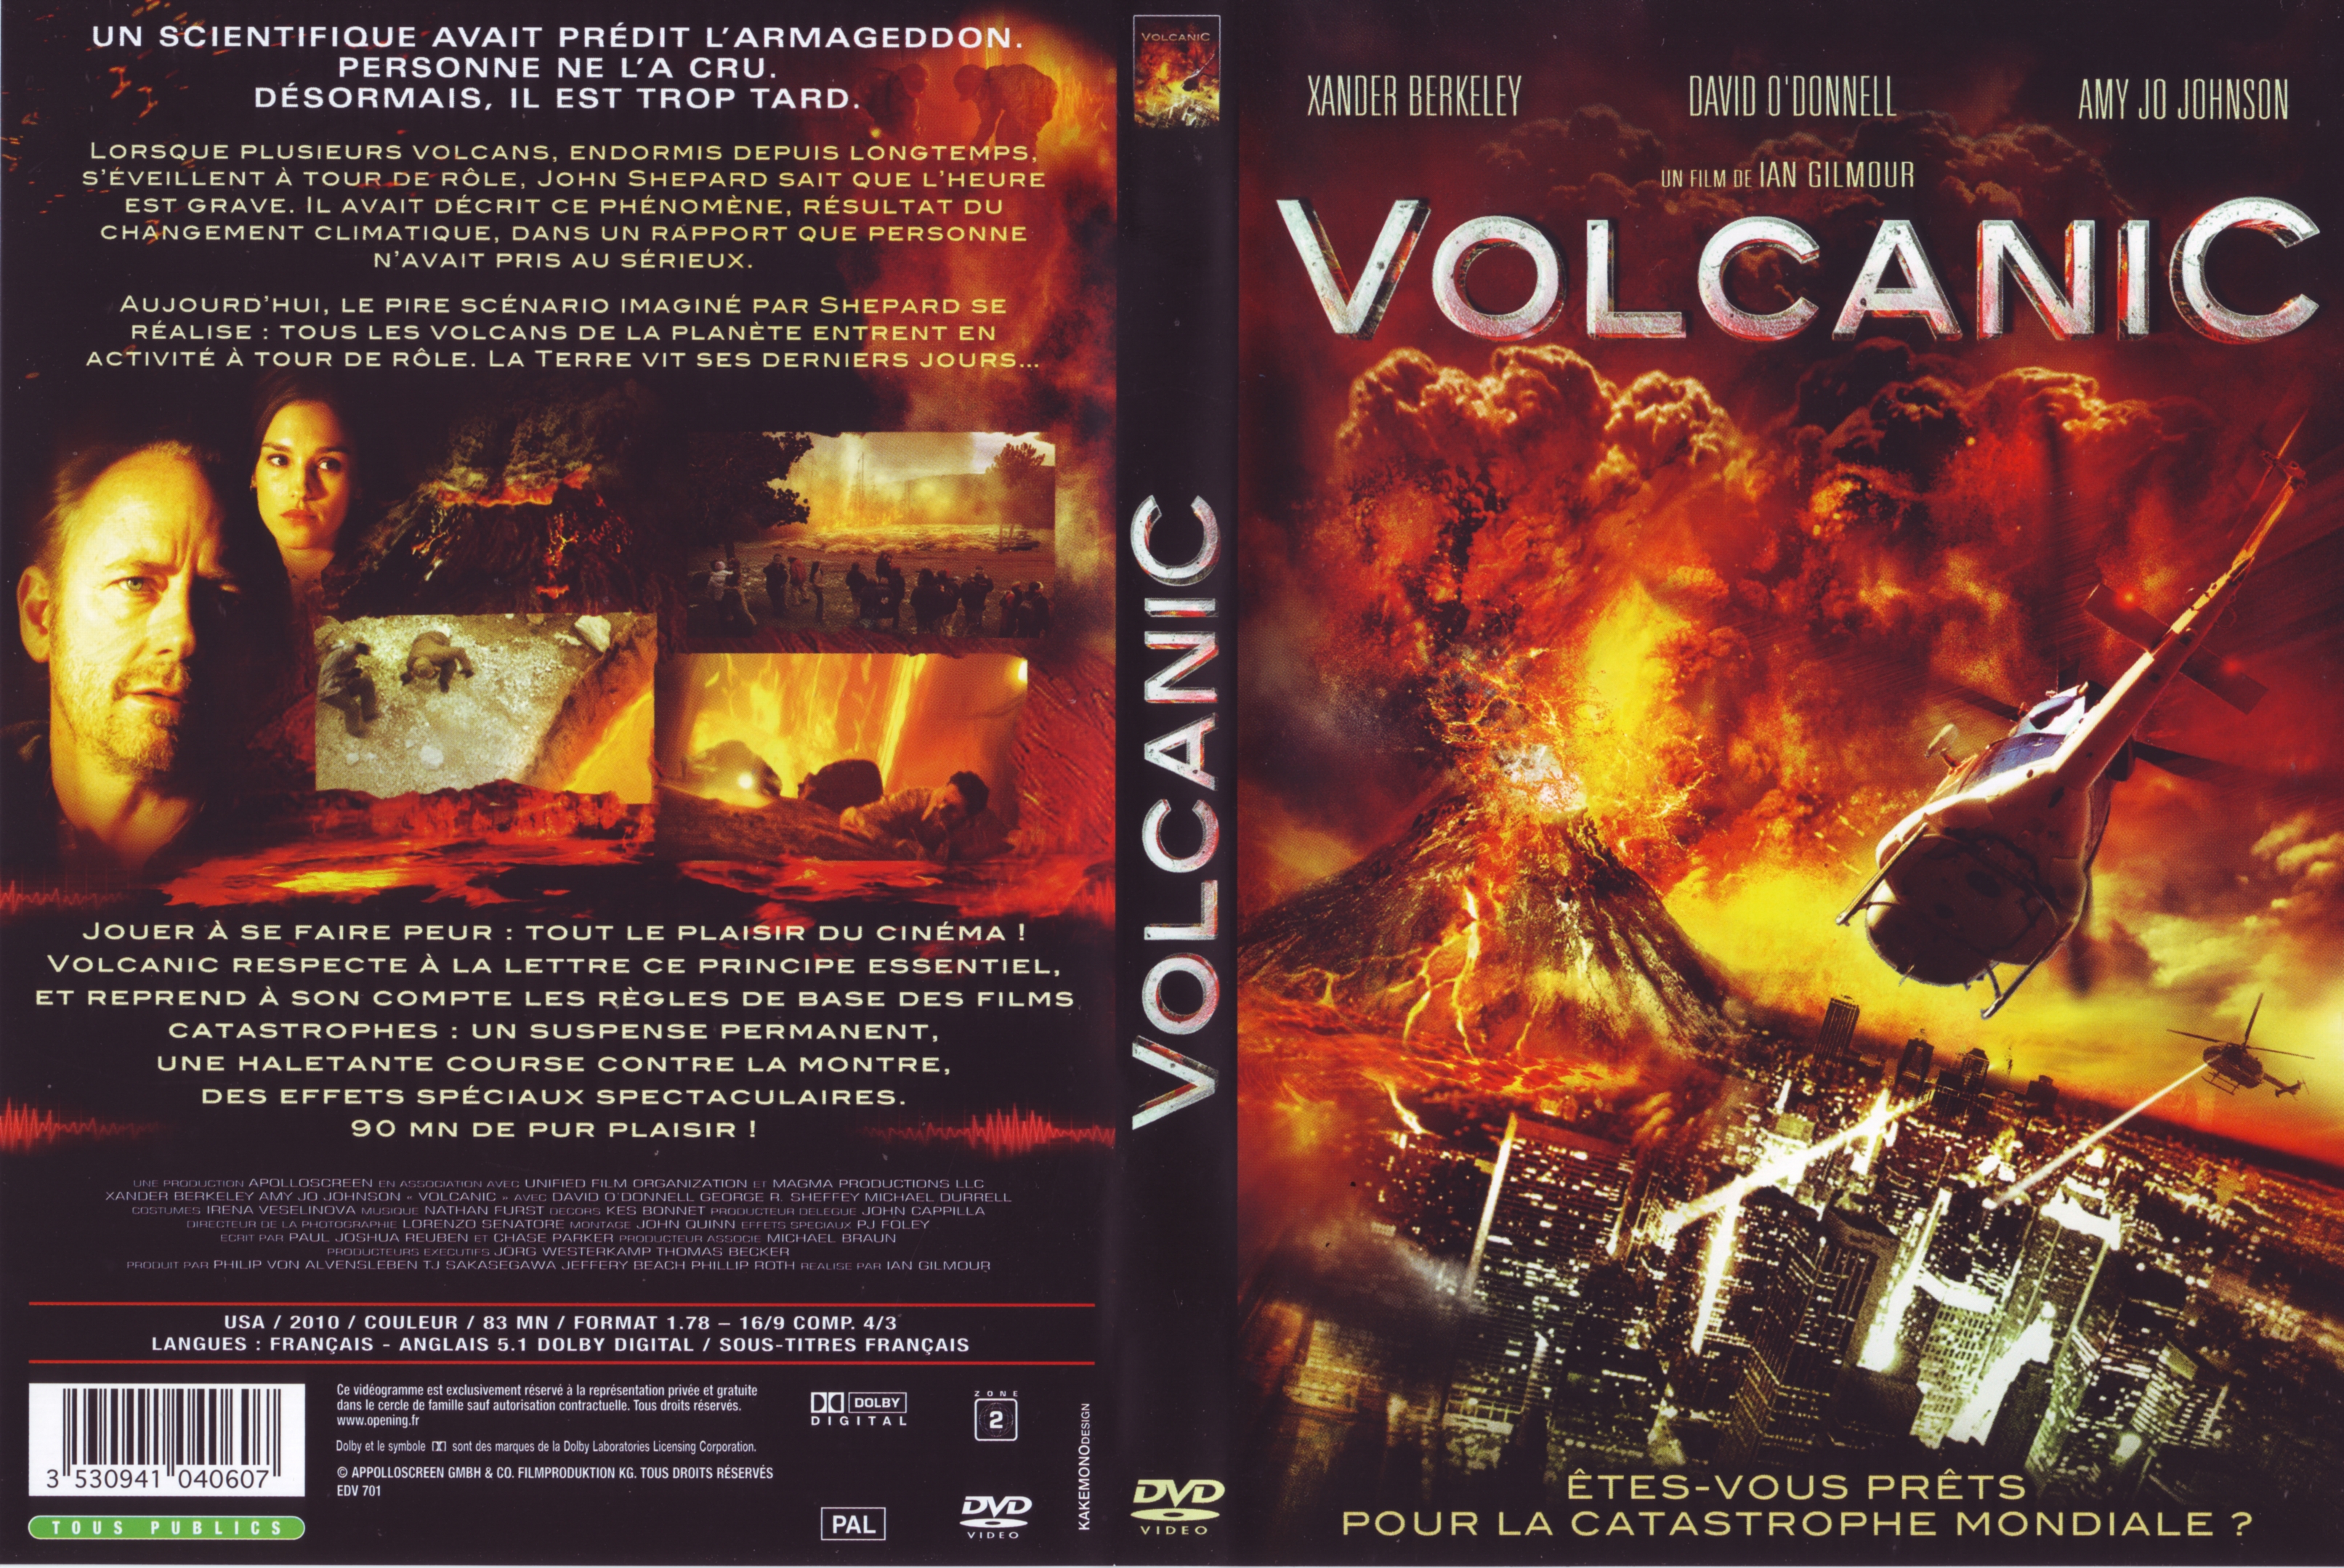 Jaquette DVD Volcanic